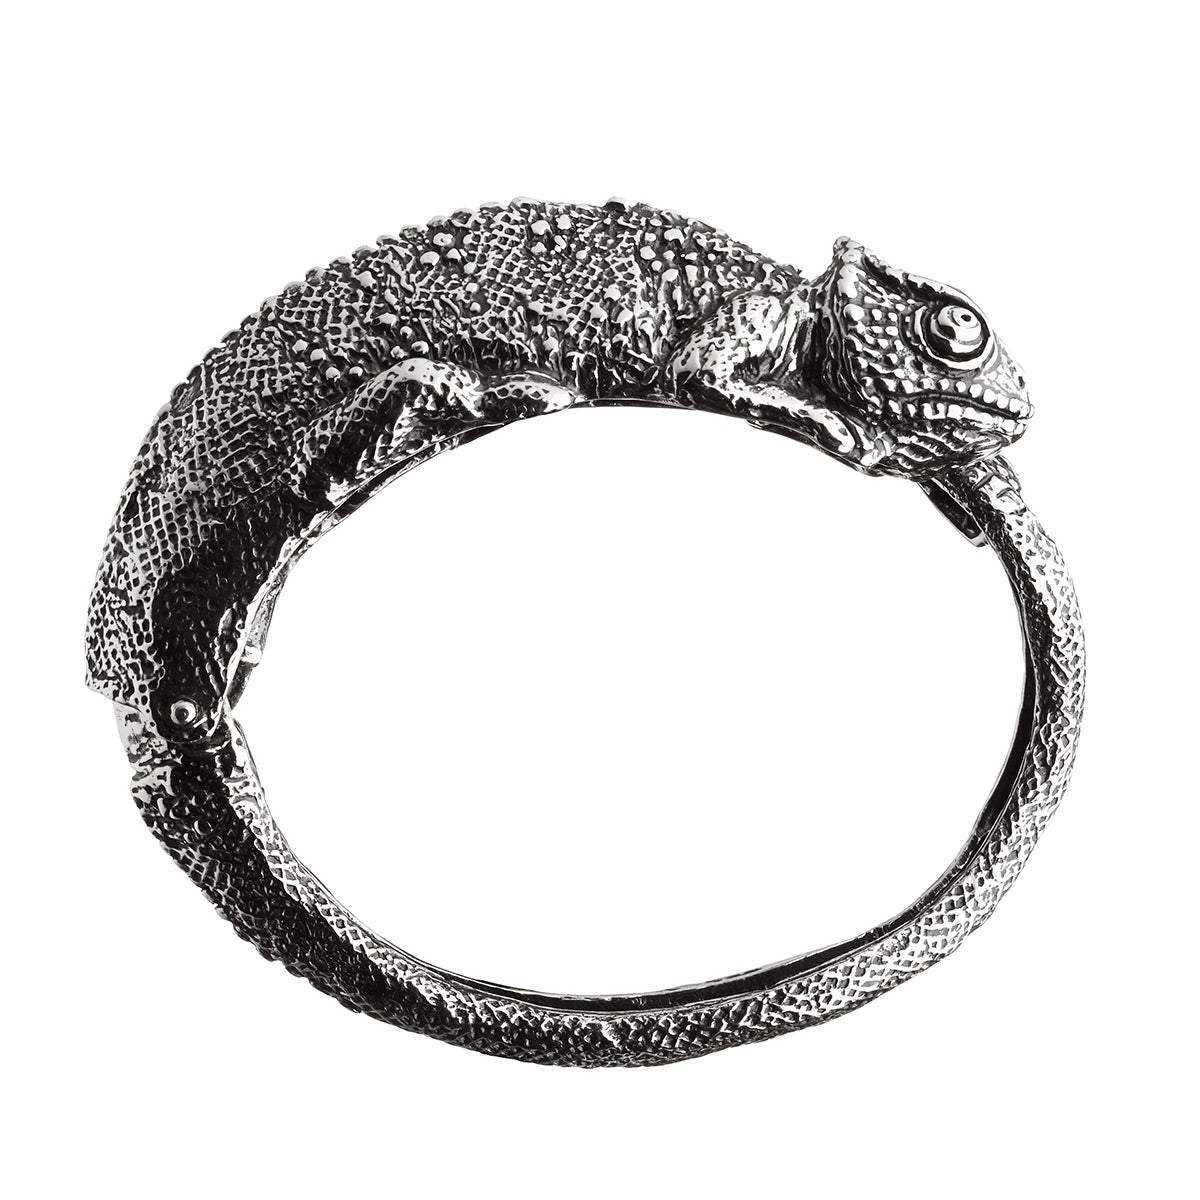 Giovanni Raspini Handmade Silver Chameleon Bracelet